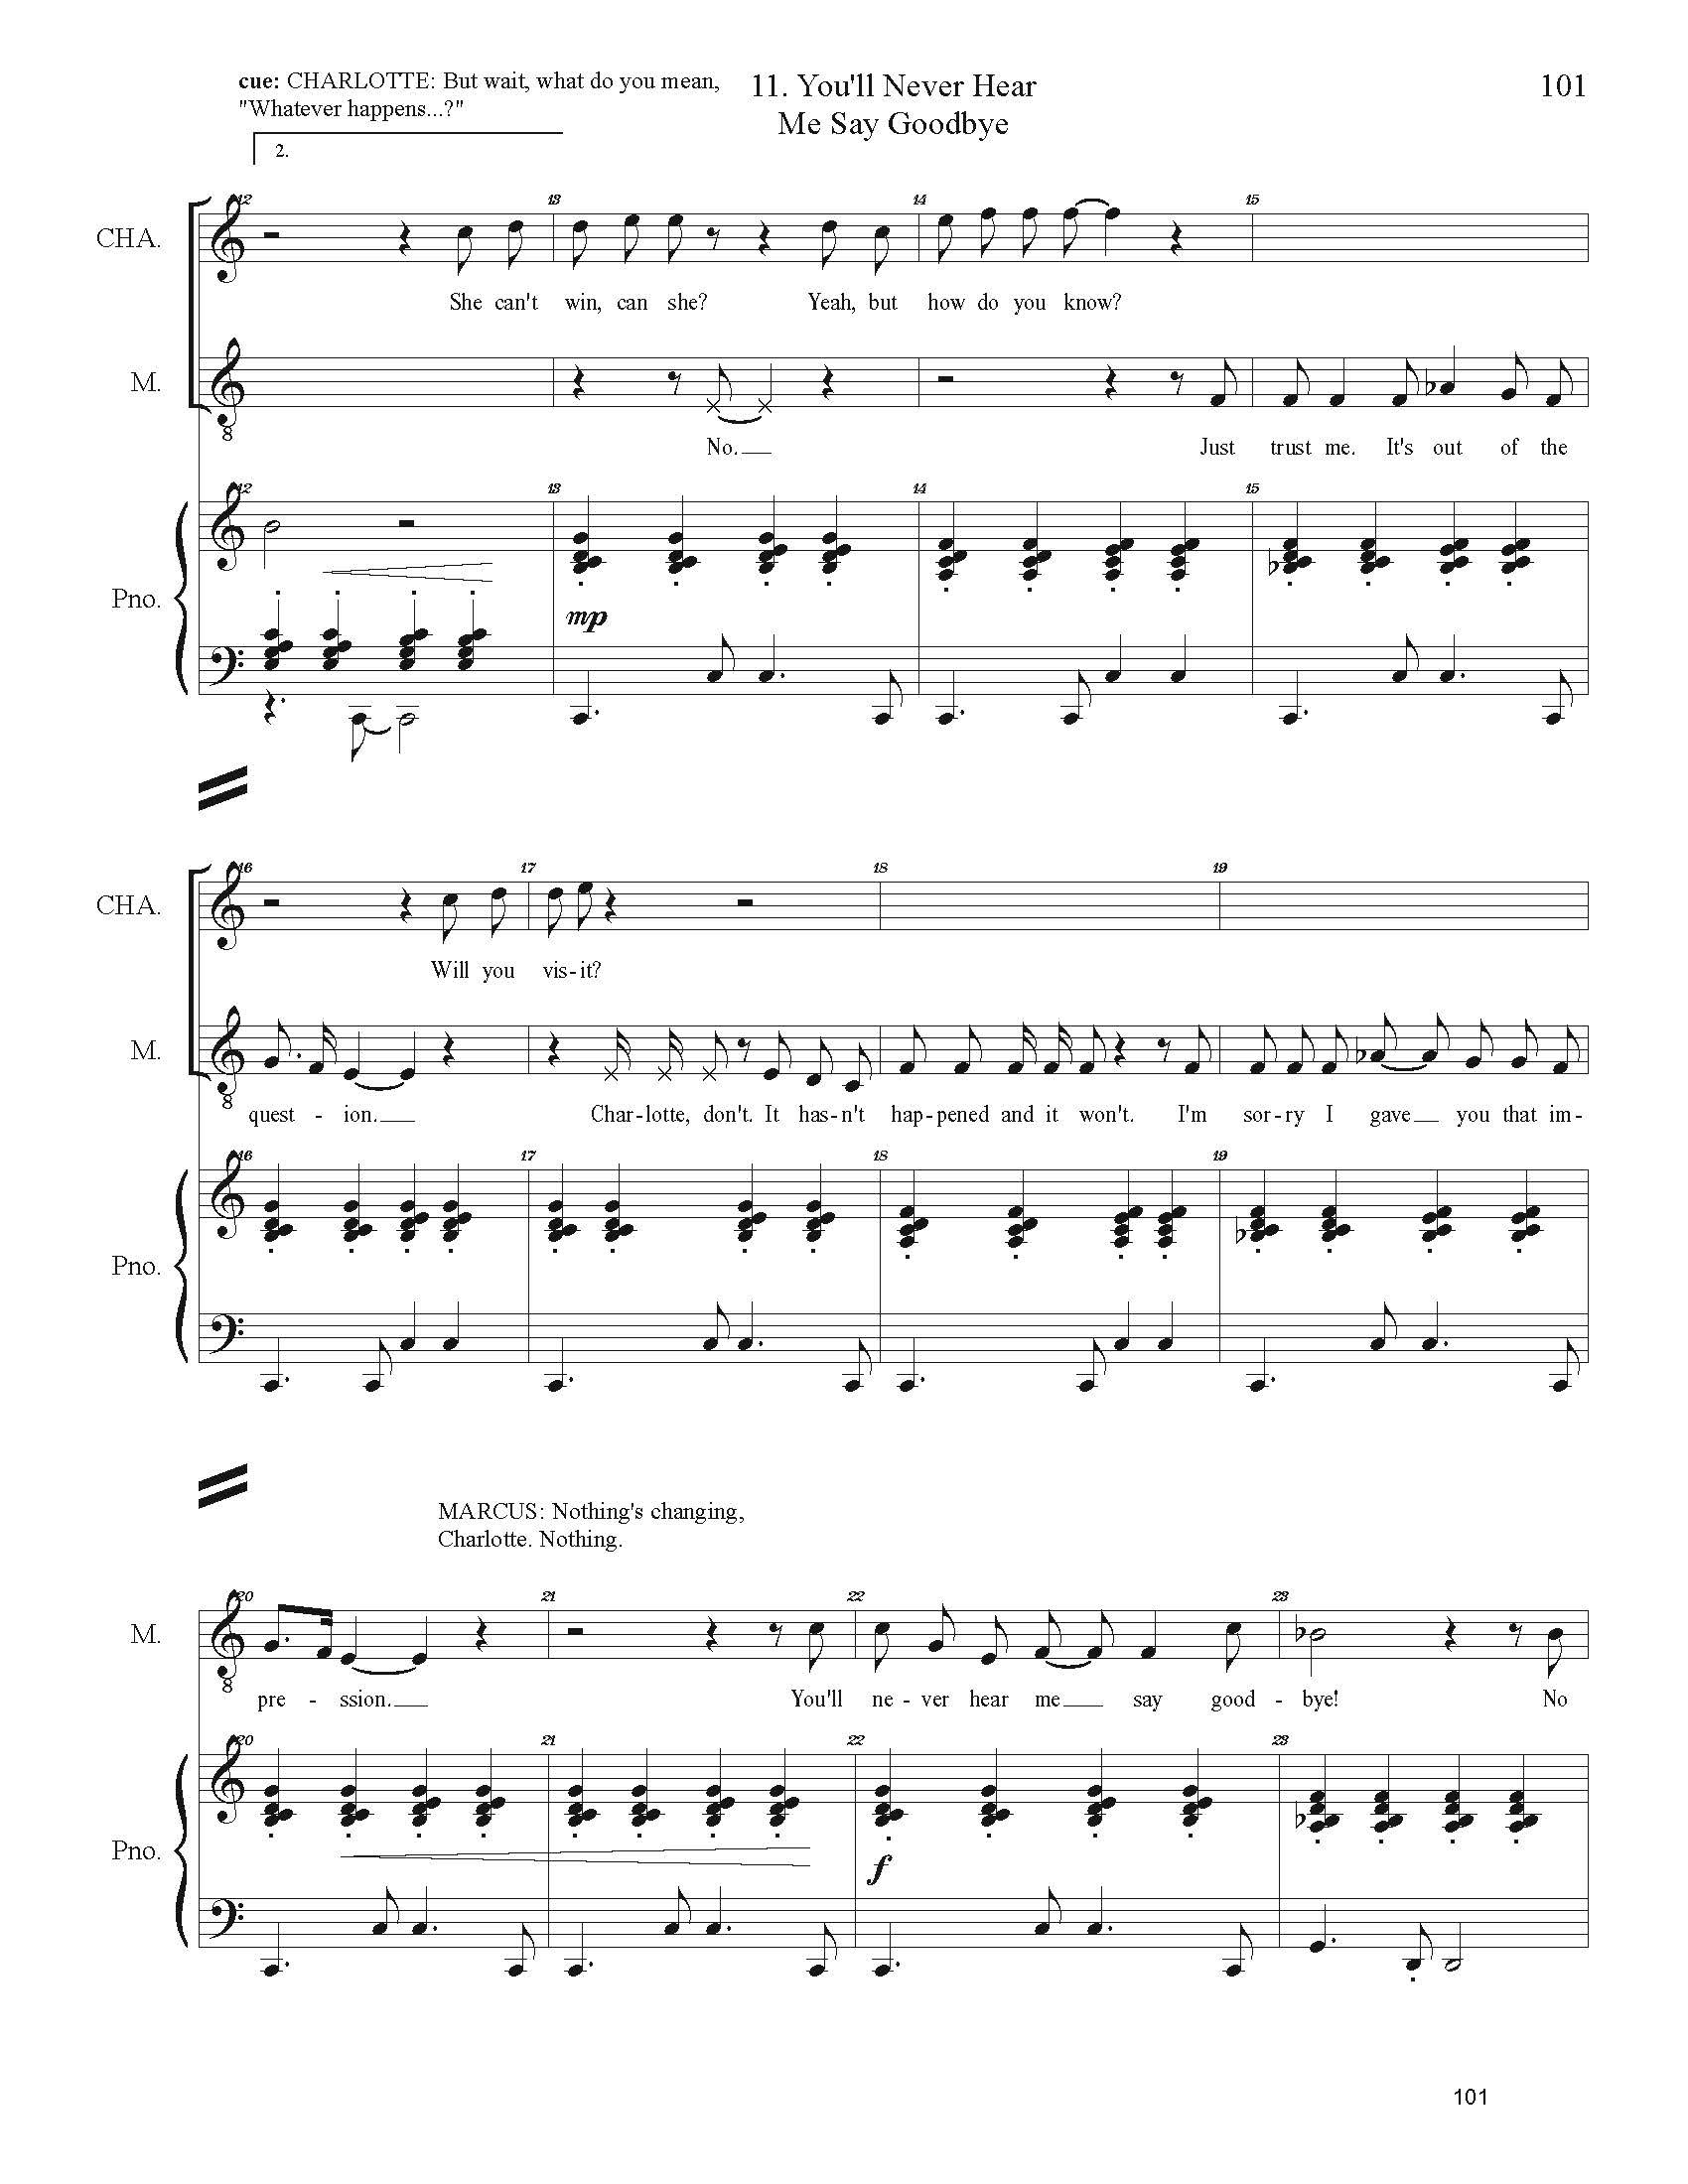 FULL PIANO VOCAL SCORE DRAFT 1 - Score_Page_101.jpg